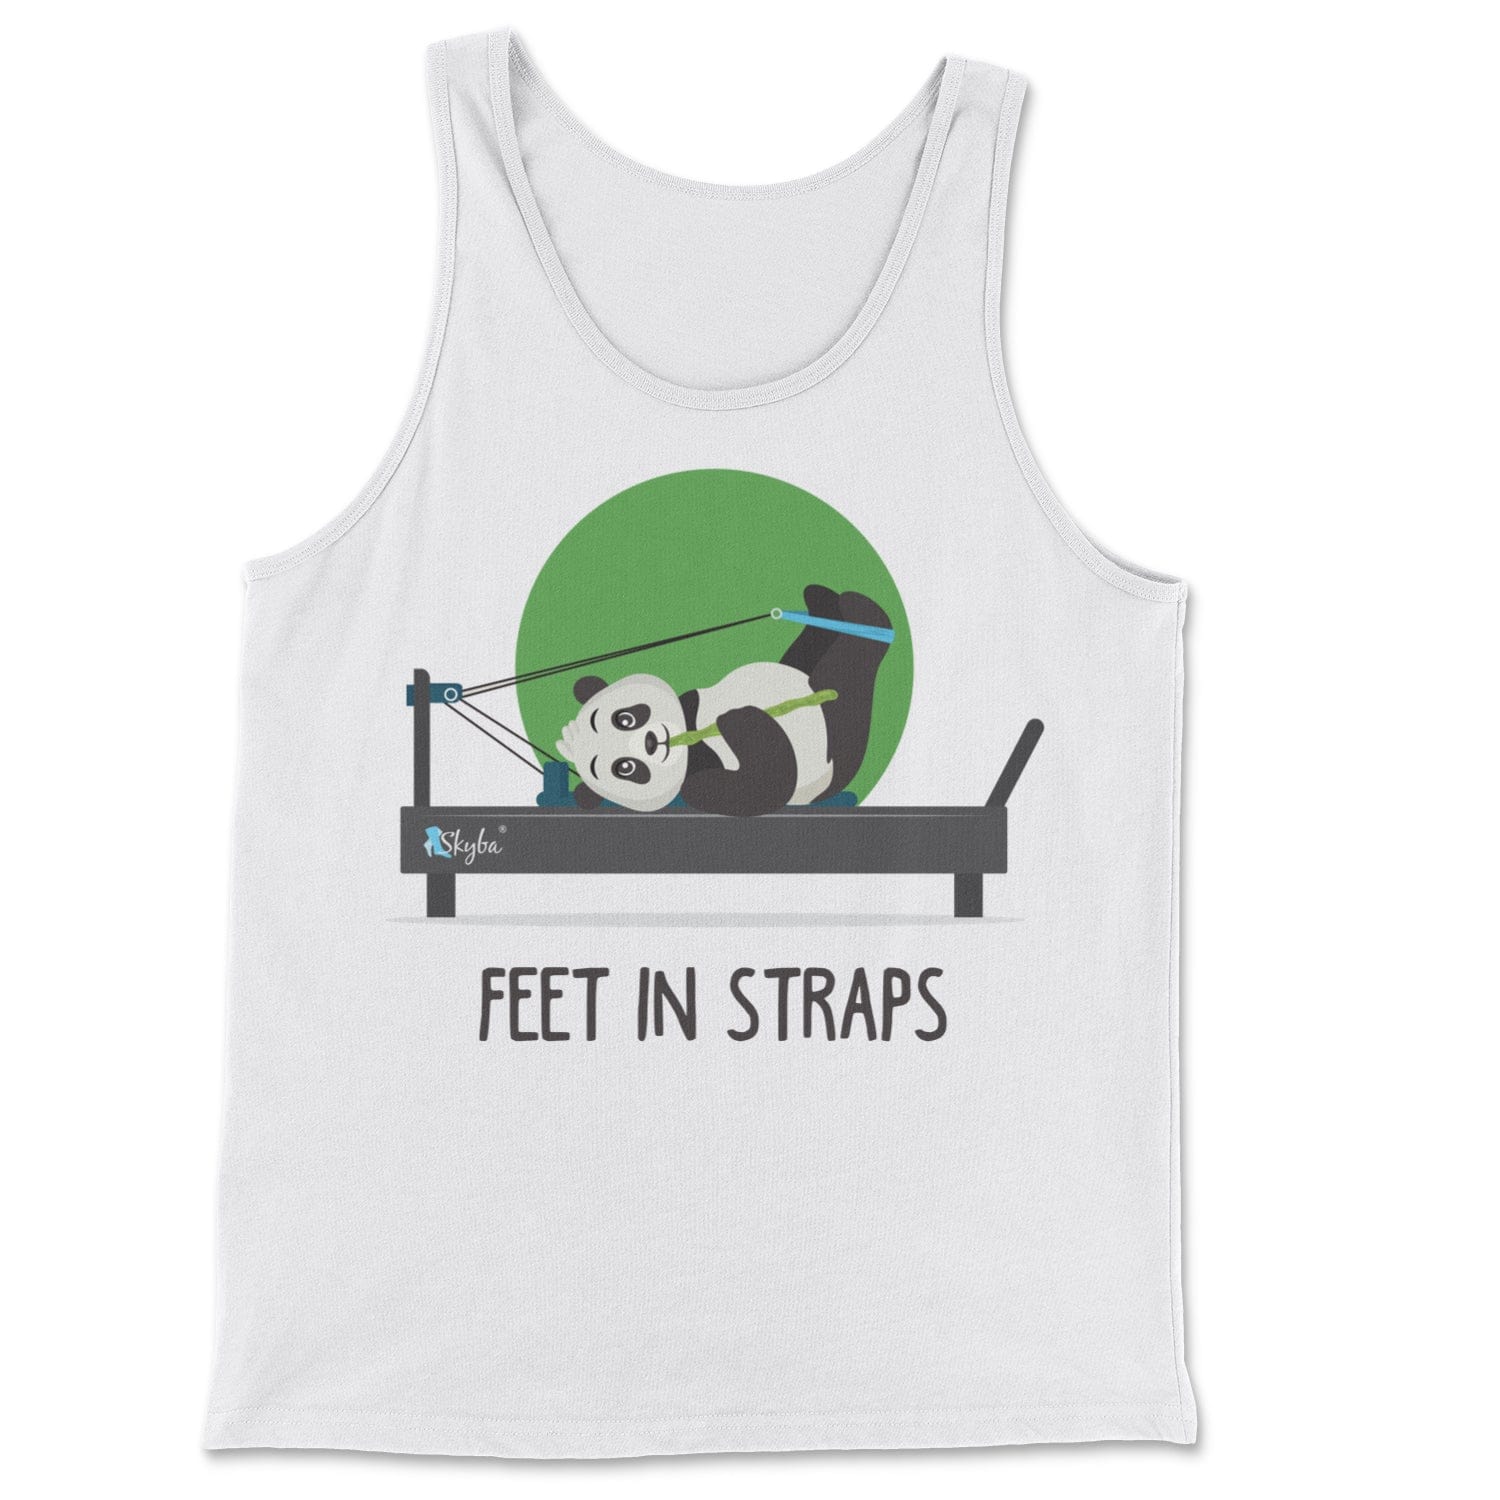 Feet in Straps Panda on Reformer - Classic Tank